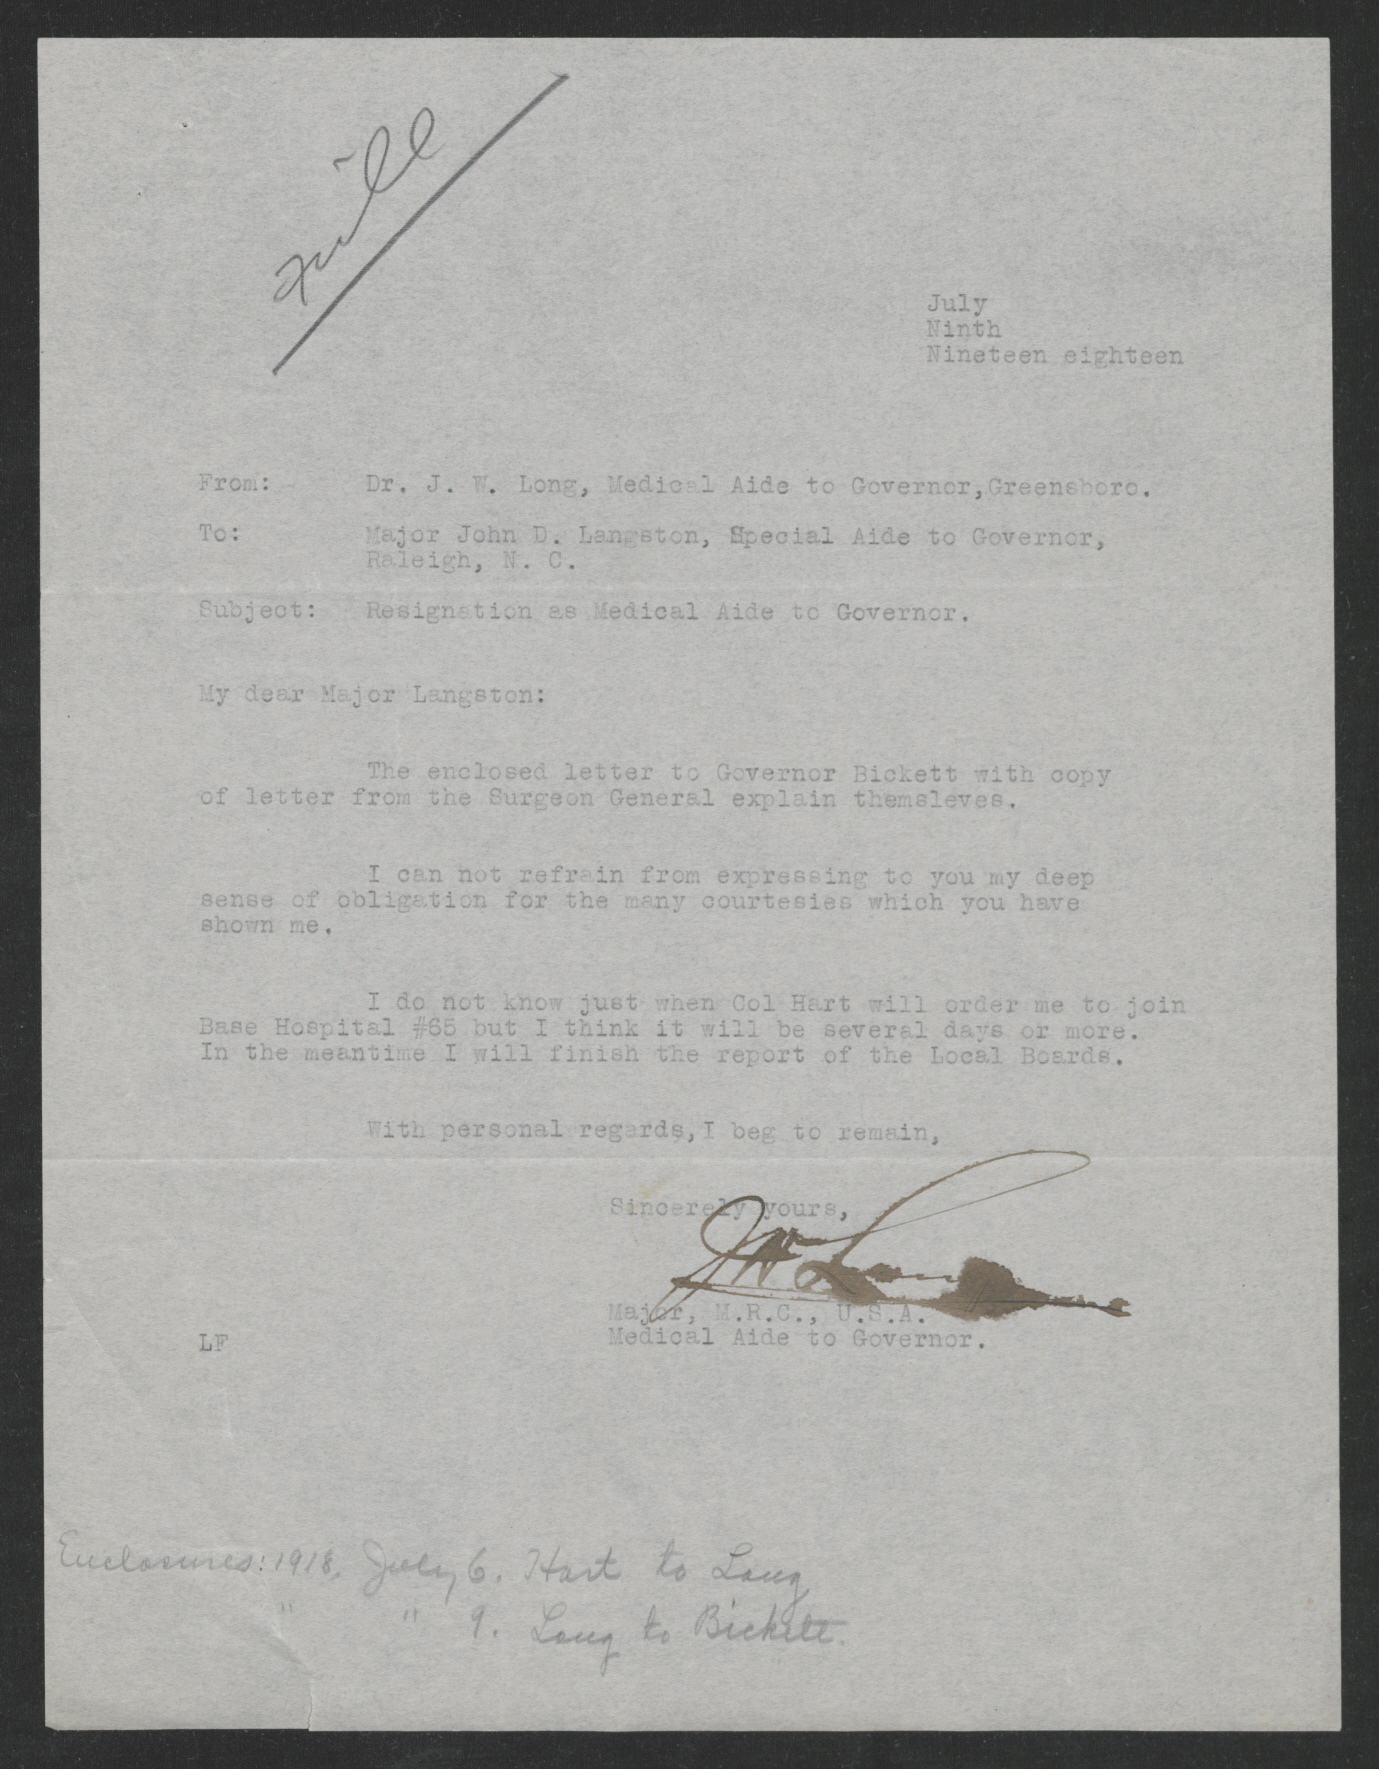 Letter from John W. Long to John D. Langston, July 9, 1918